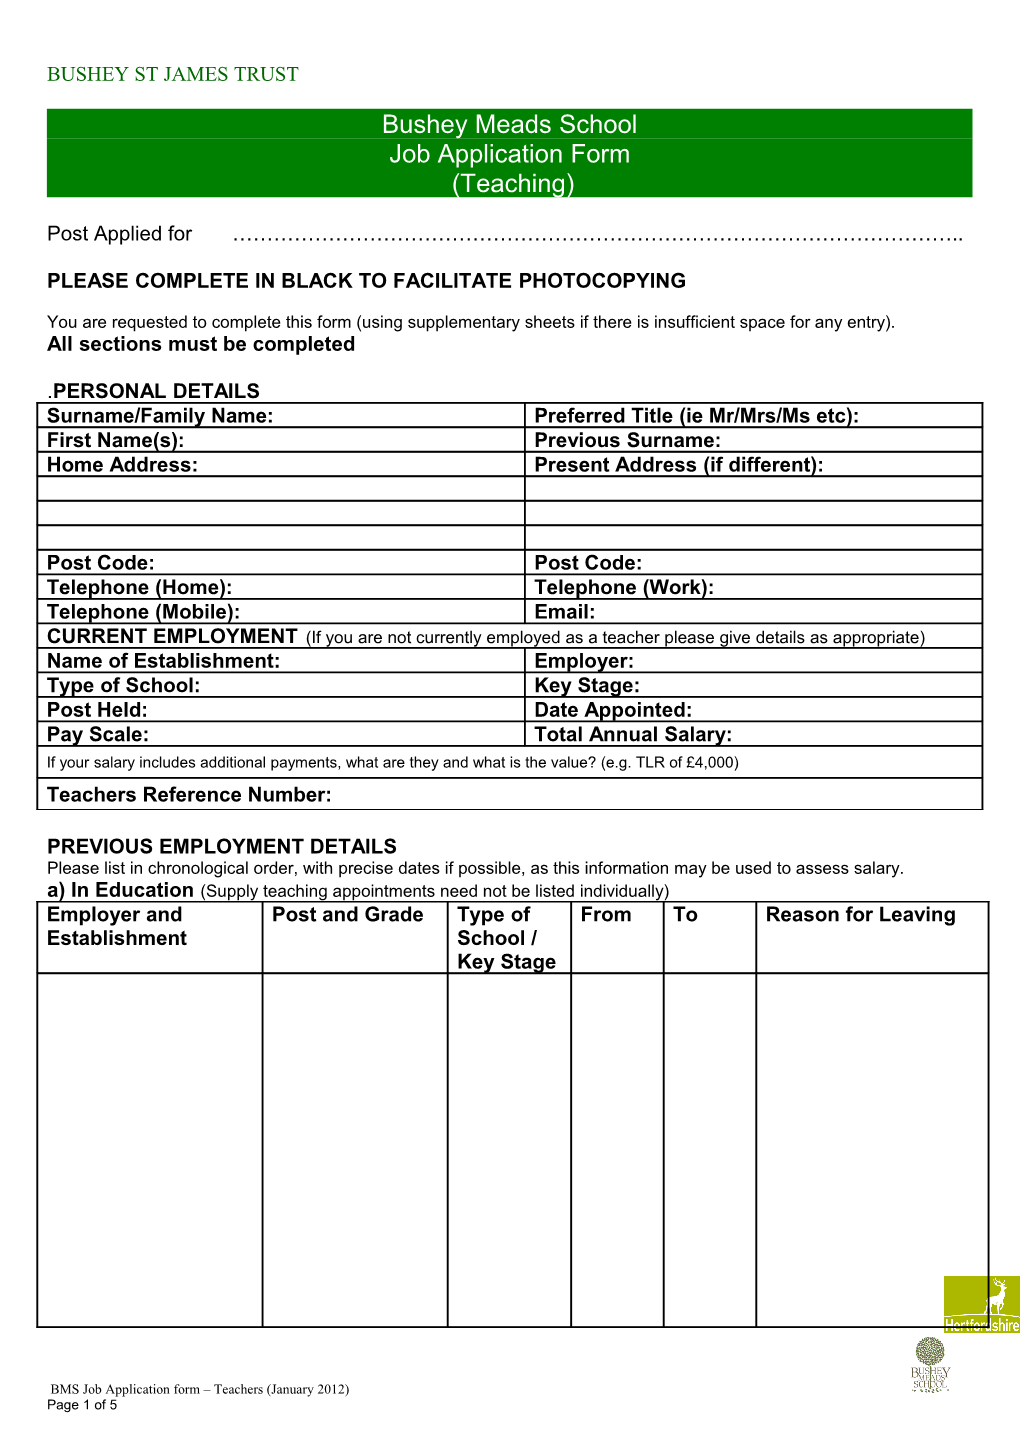 Hertfordshire County Council Job Application Form - Teaching (Teaching)